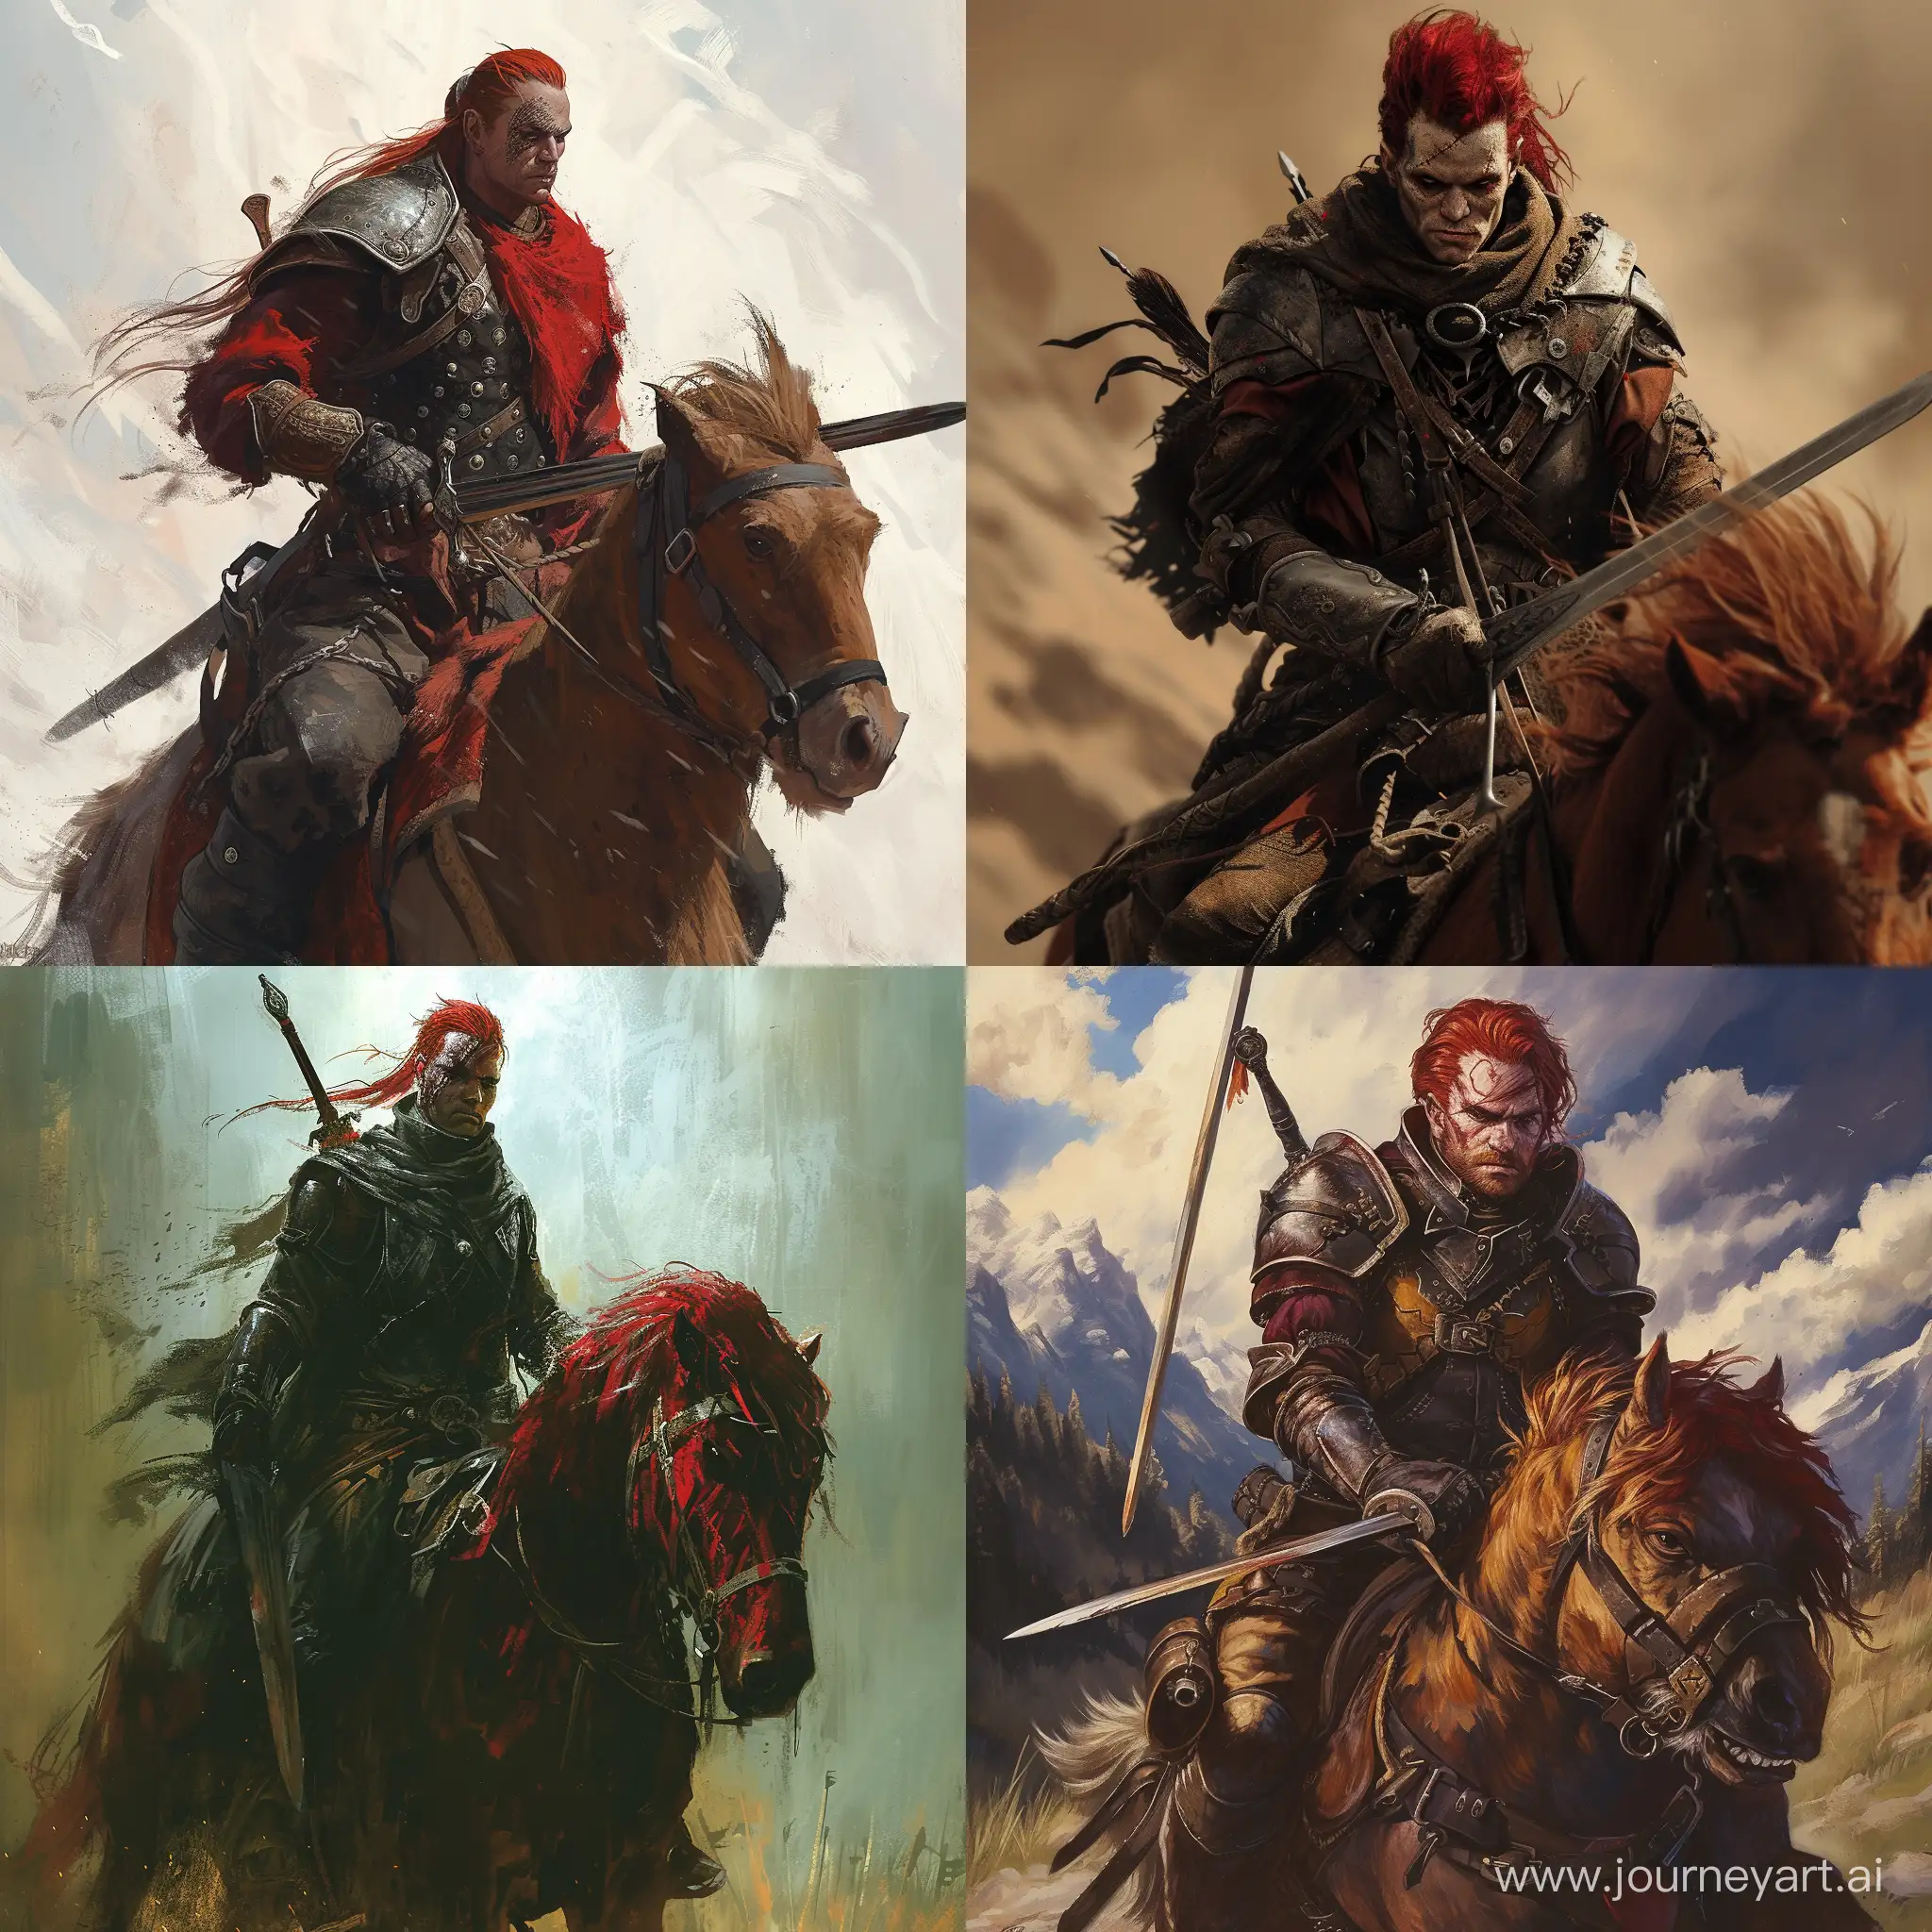 Red headed Swordsman, scar on face, Riding a mount --v 6 --ar 1:1 --no 44894